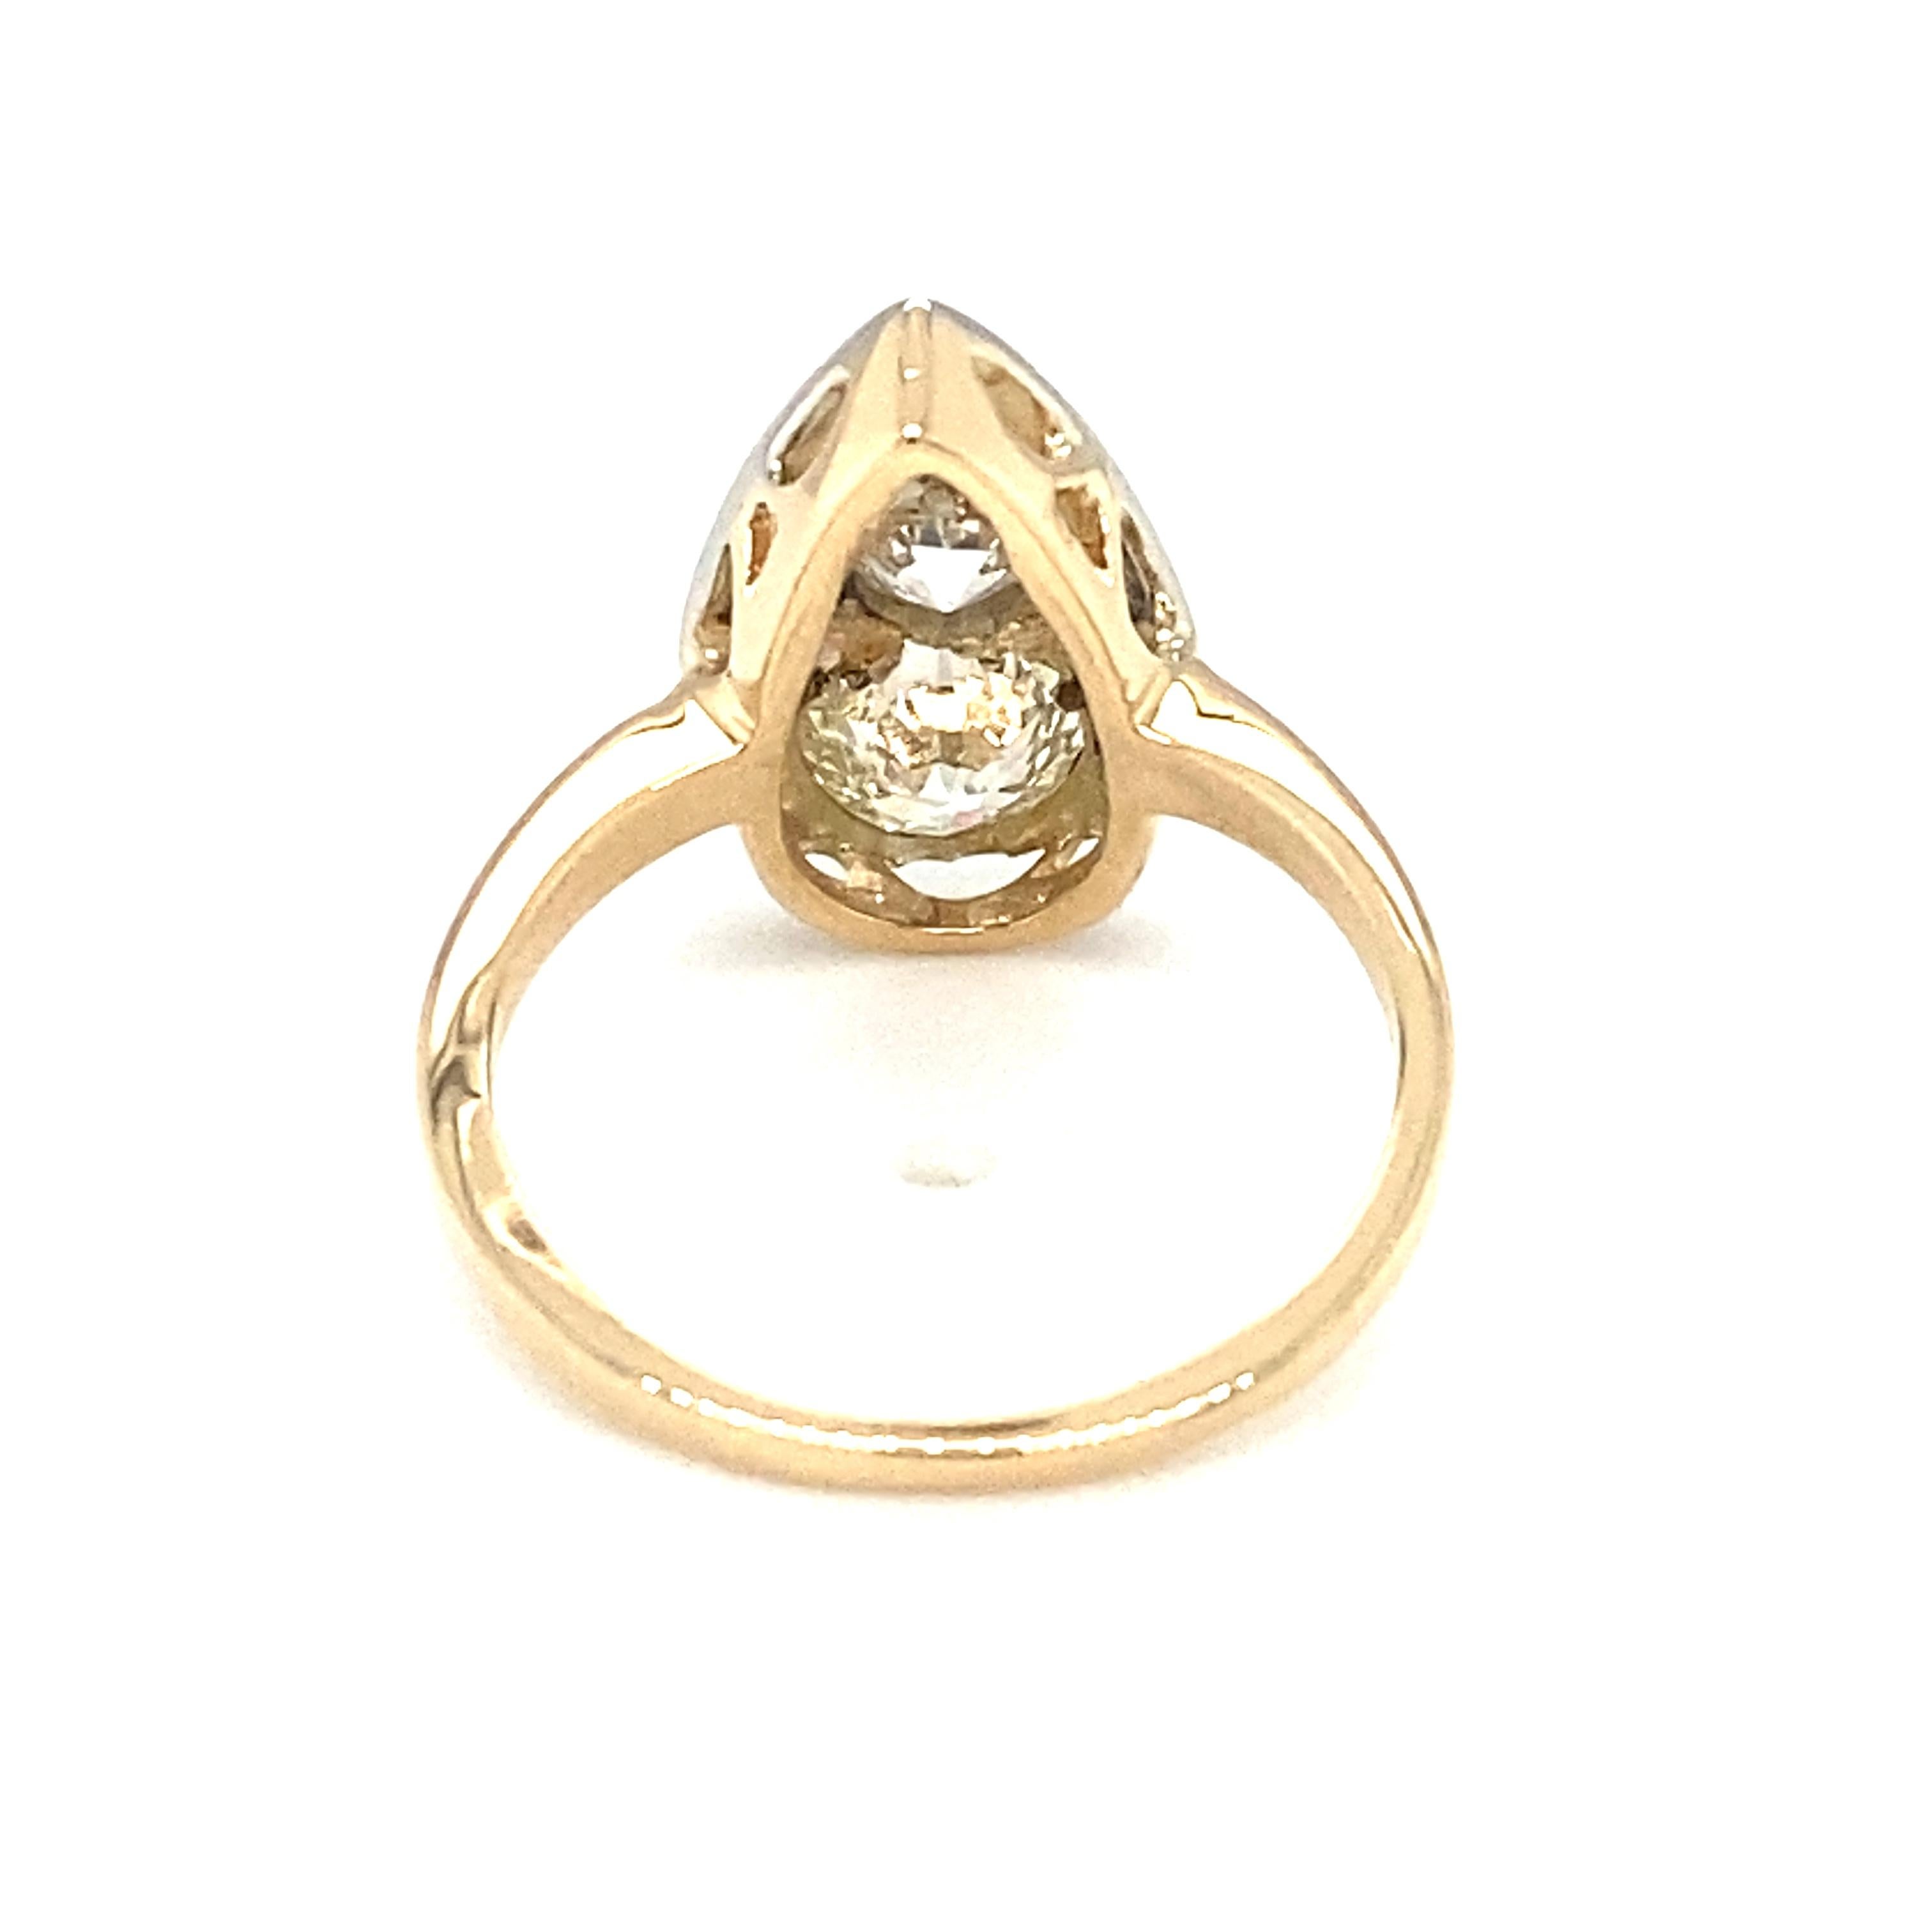 Circa 1920s Art Deco 1.30 Carat Total Diamond Ring in 14 Karat Gold For Sale 1